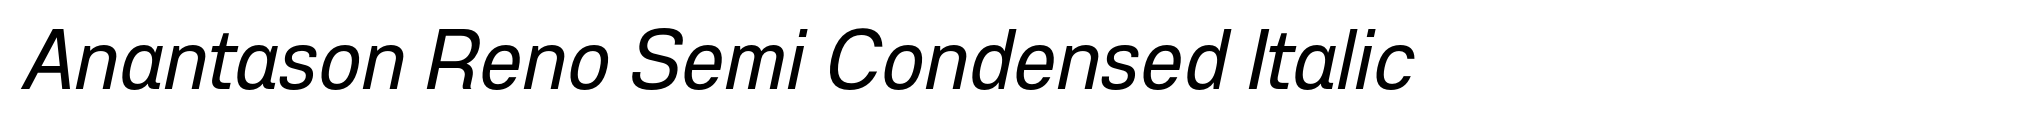 Anantason Reno Semi Condensed Italic image